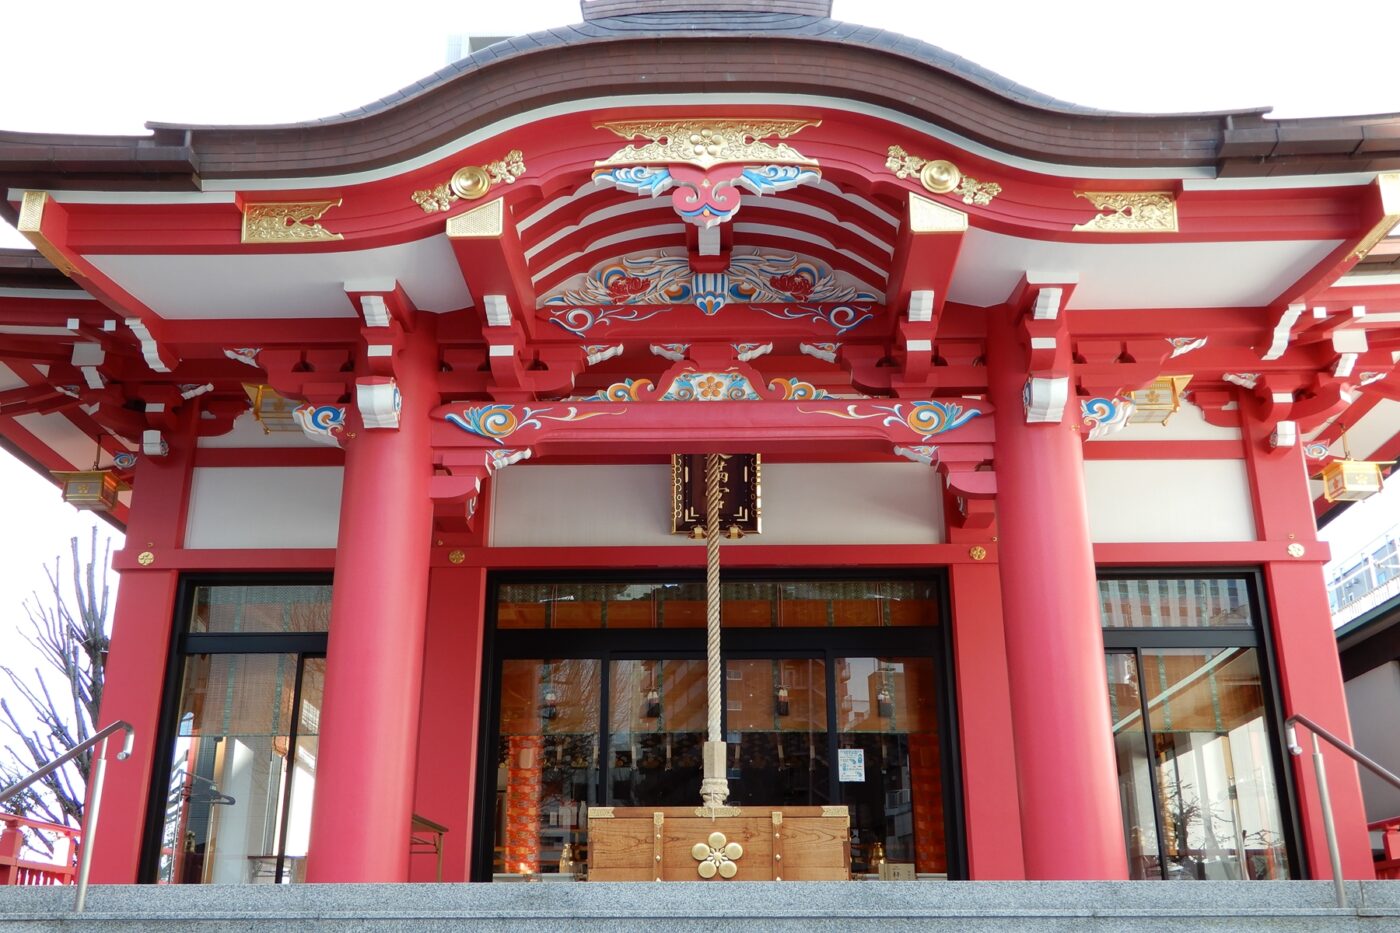 成子天神社の写真